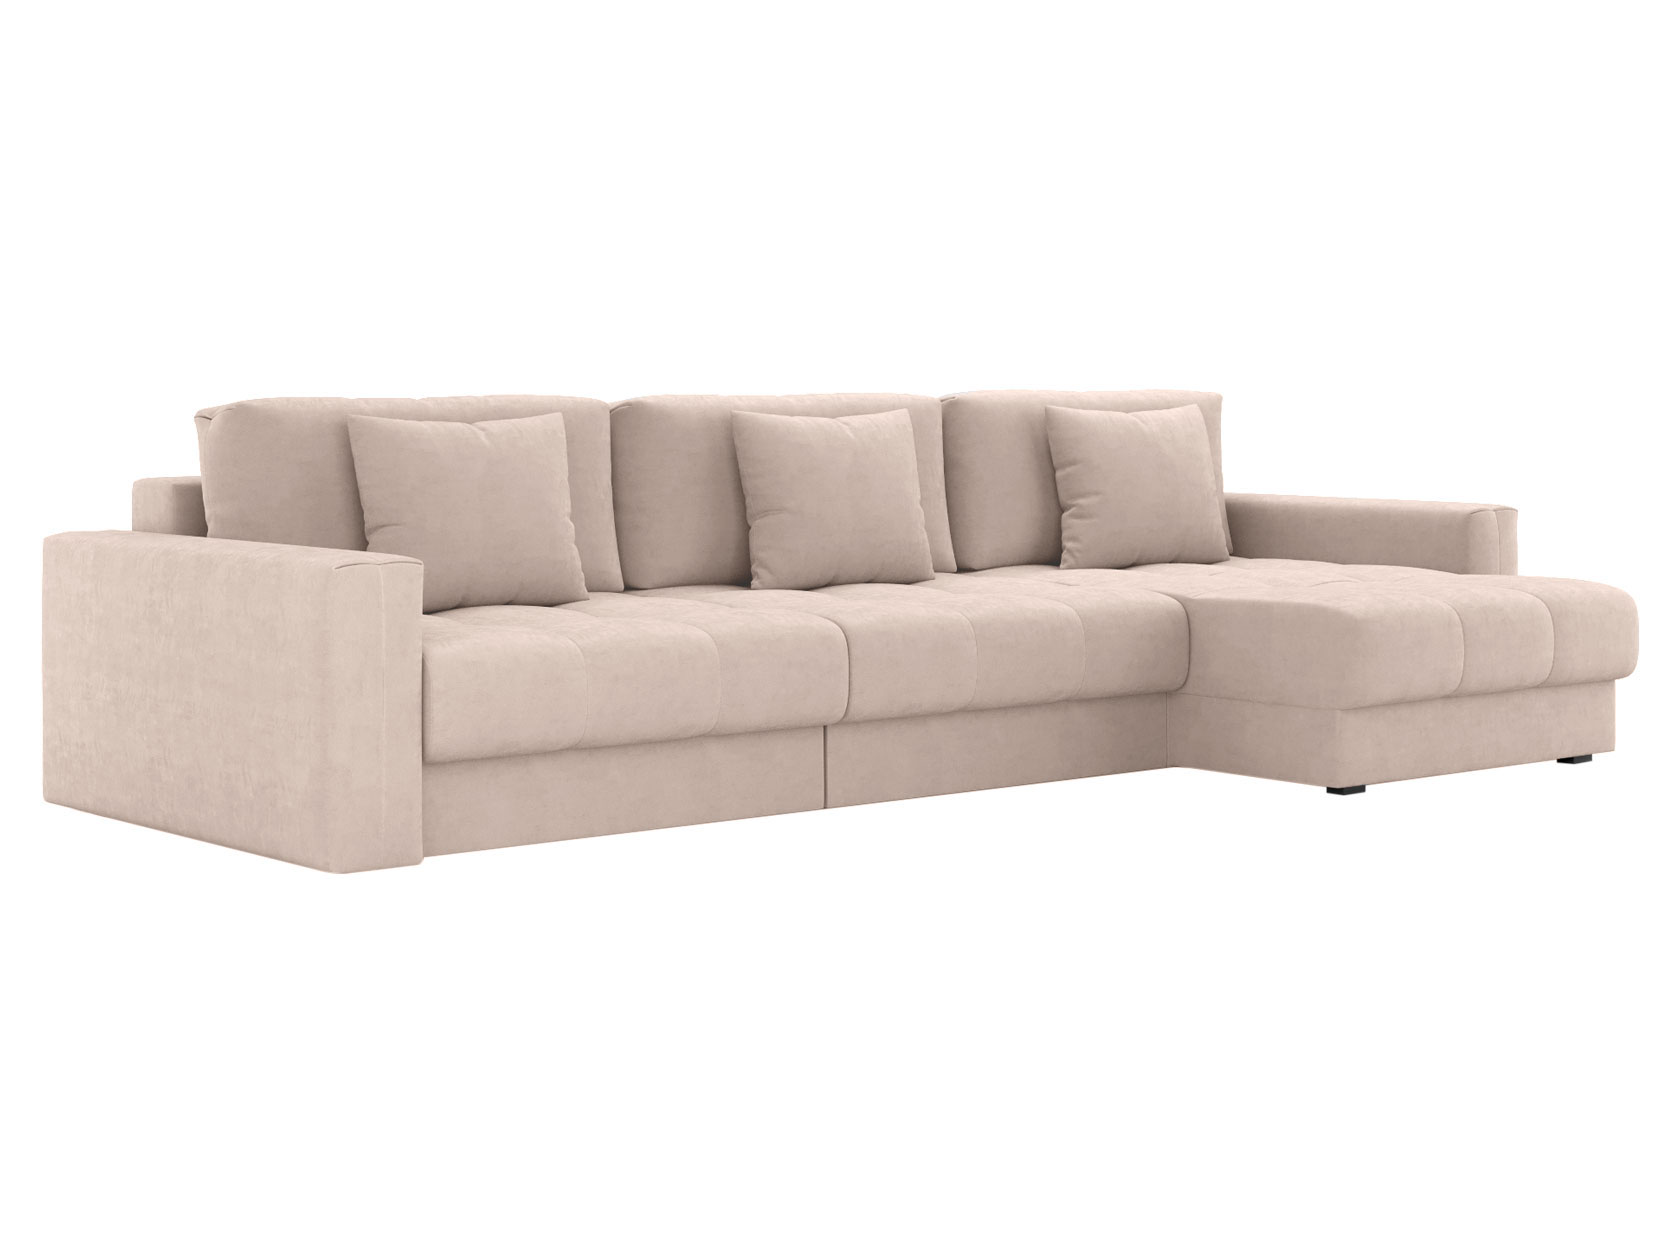 Угловой диван с оттоманкой Диван Клермон с оттоманкой Макси Клермон Макси фото 31